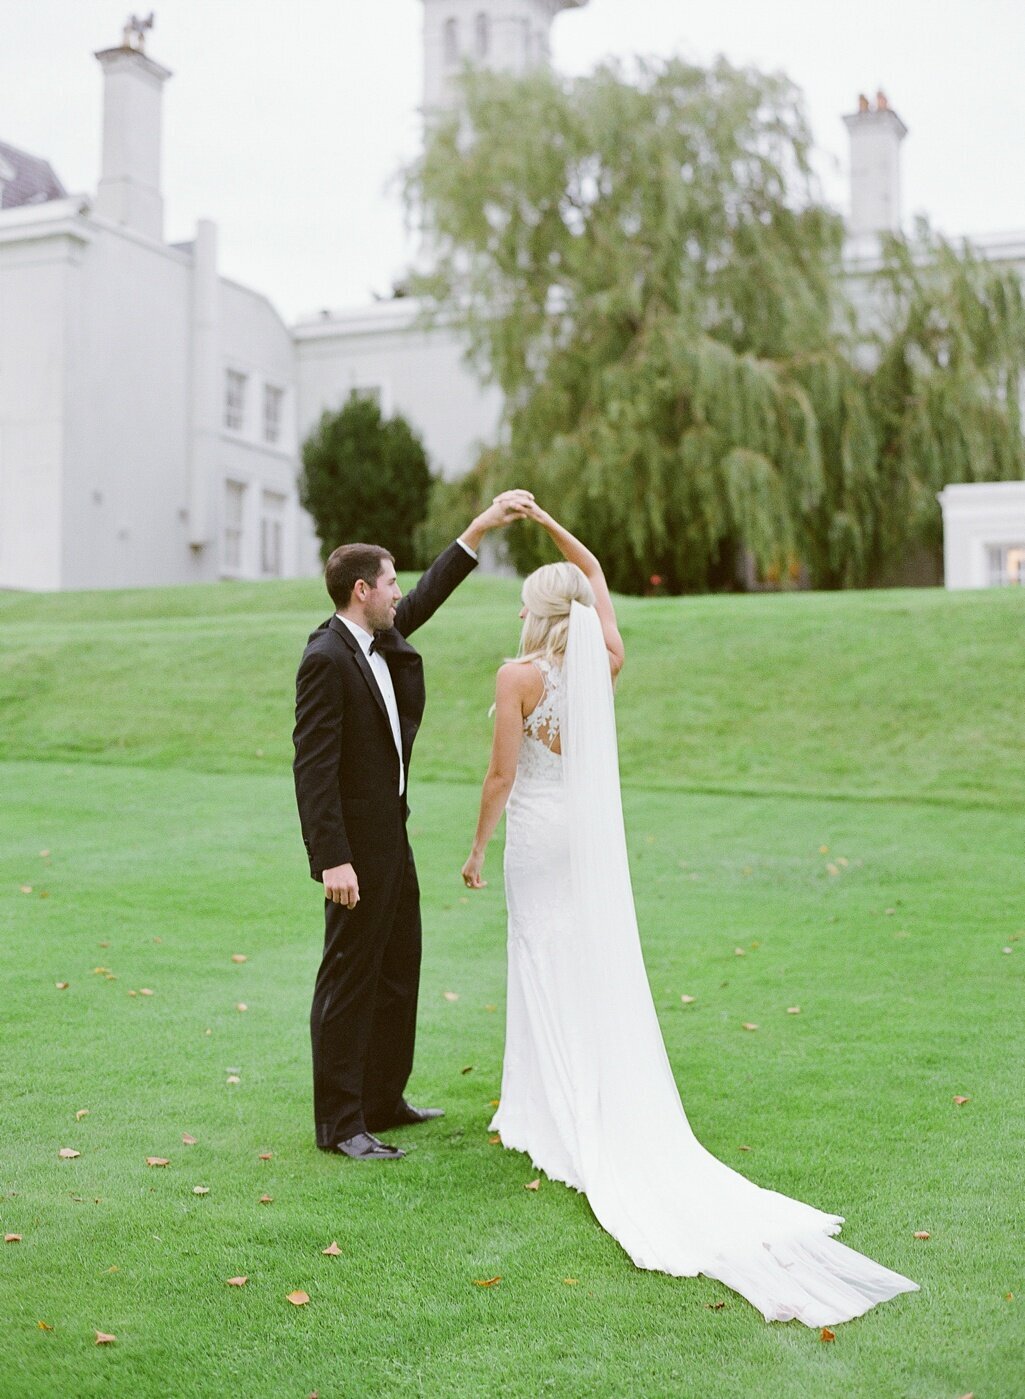 Jessie-Barksdale-Photography_K-Club-Ireland-Destination-Wedding-Photographer_0012